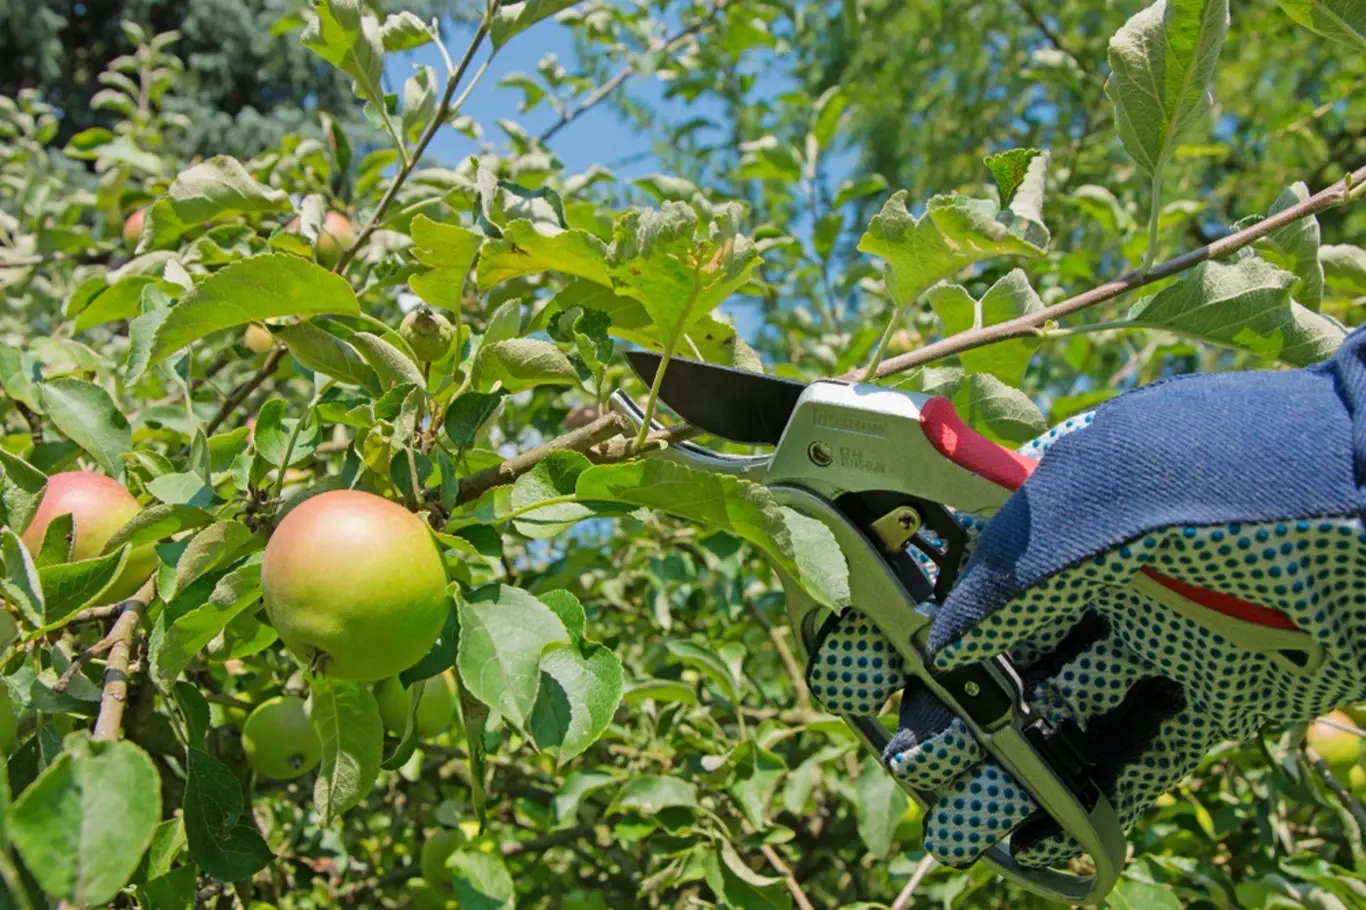 jabloň řez léto